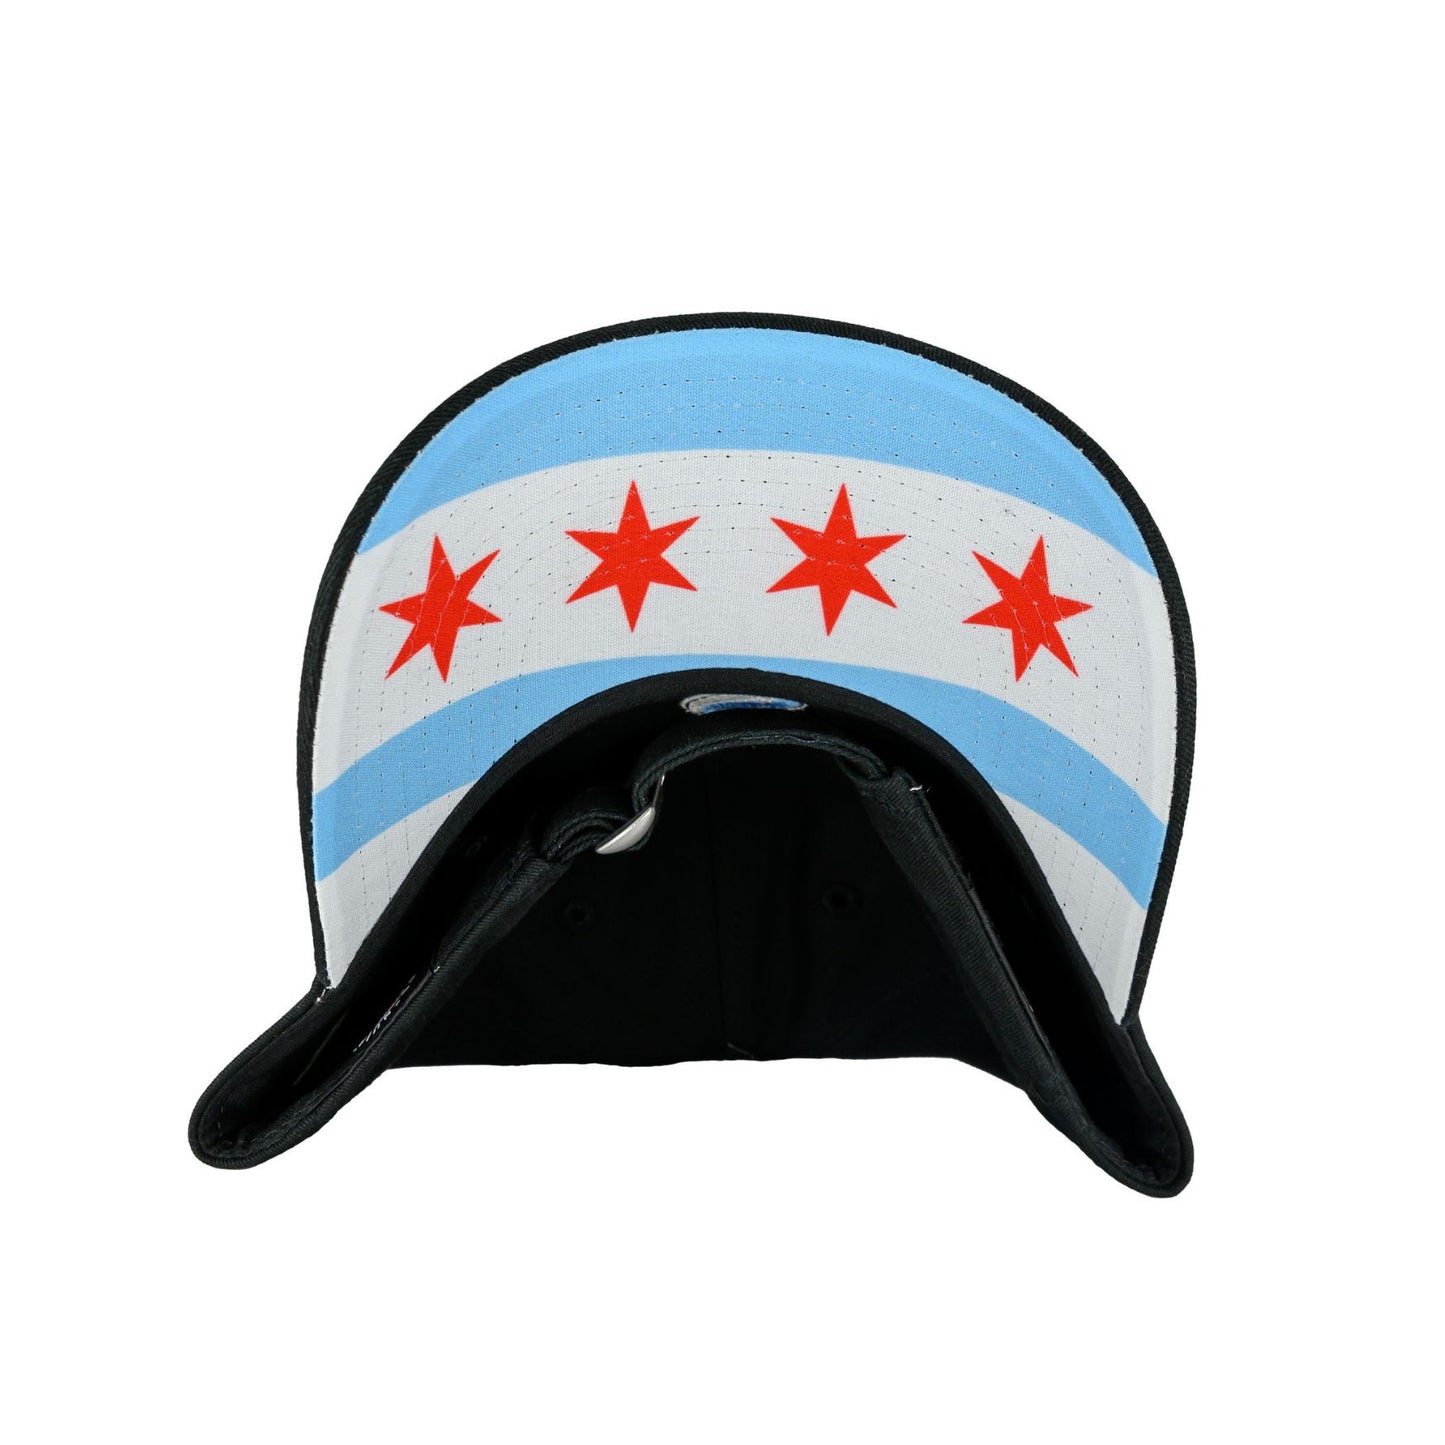 Chicago Bulls OTC New Era 9TWENTY Adjustable Hat